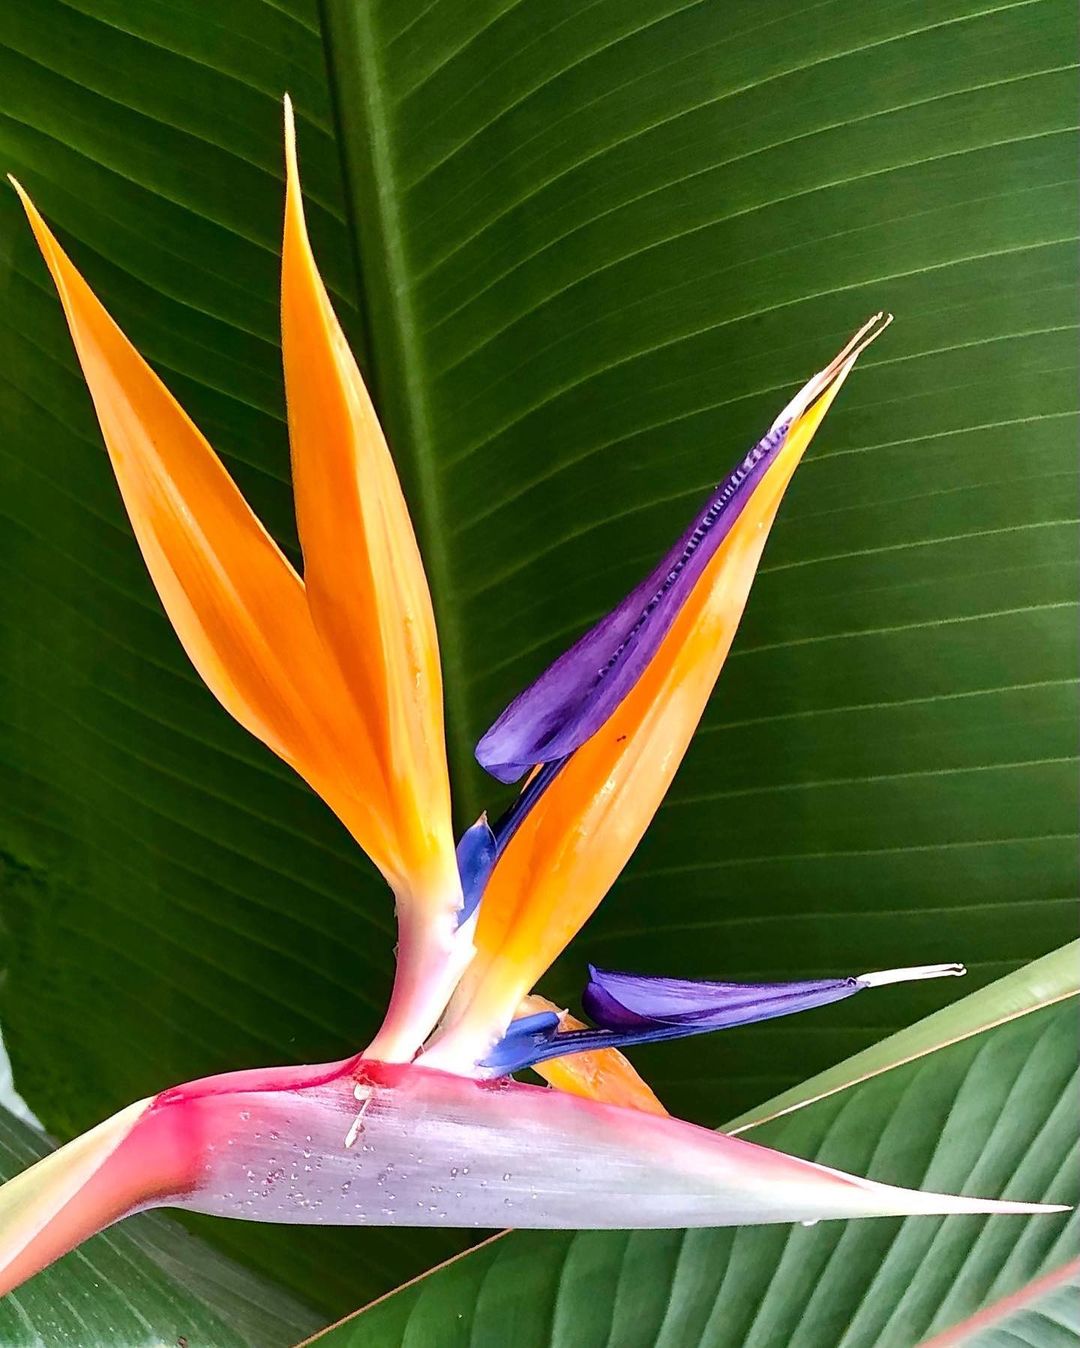 Bird of Paradise flower photograph - a stunning fine art print capturing the beauty of the Bird of Paradise flower.